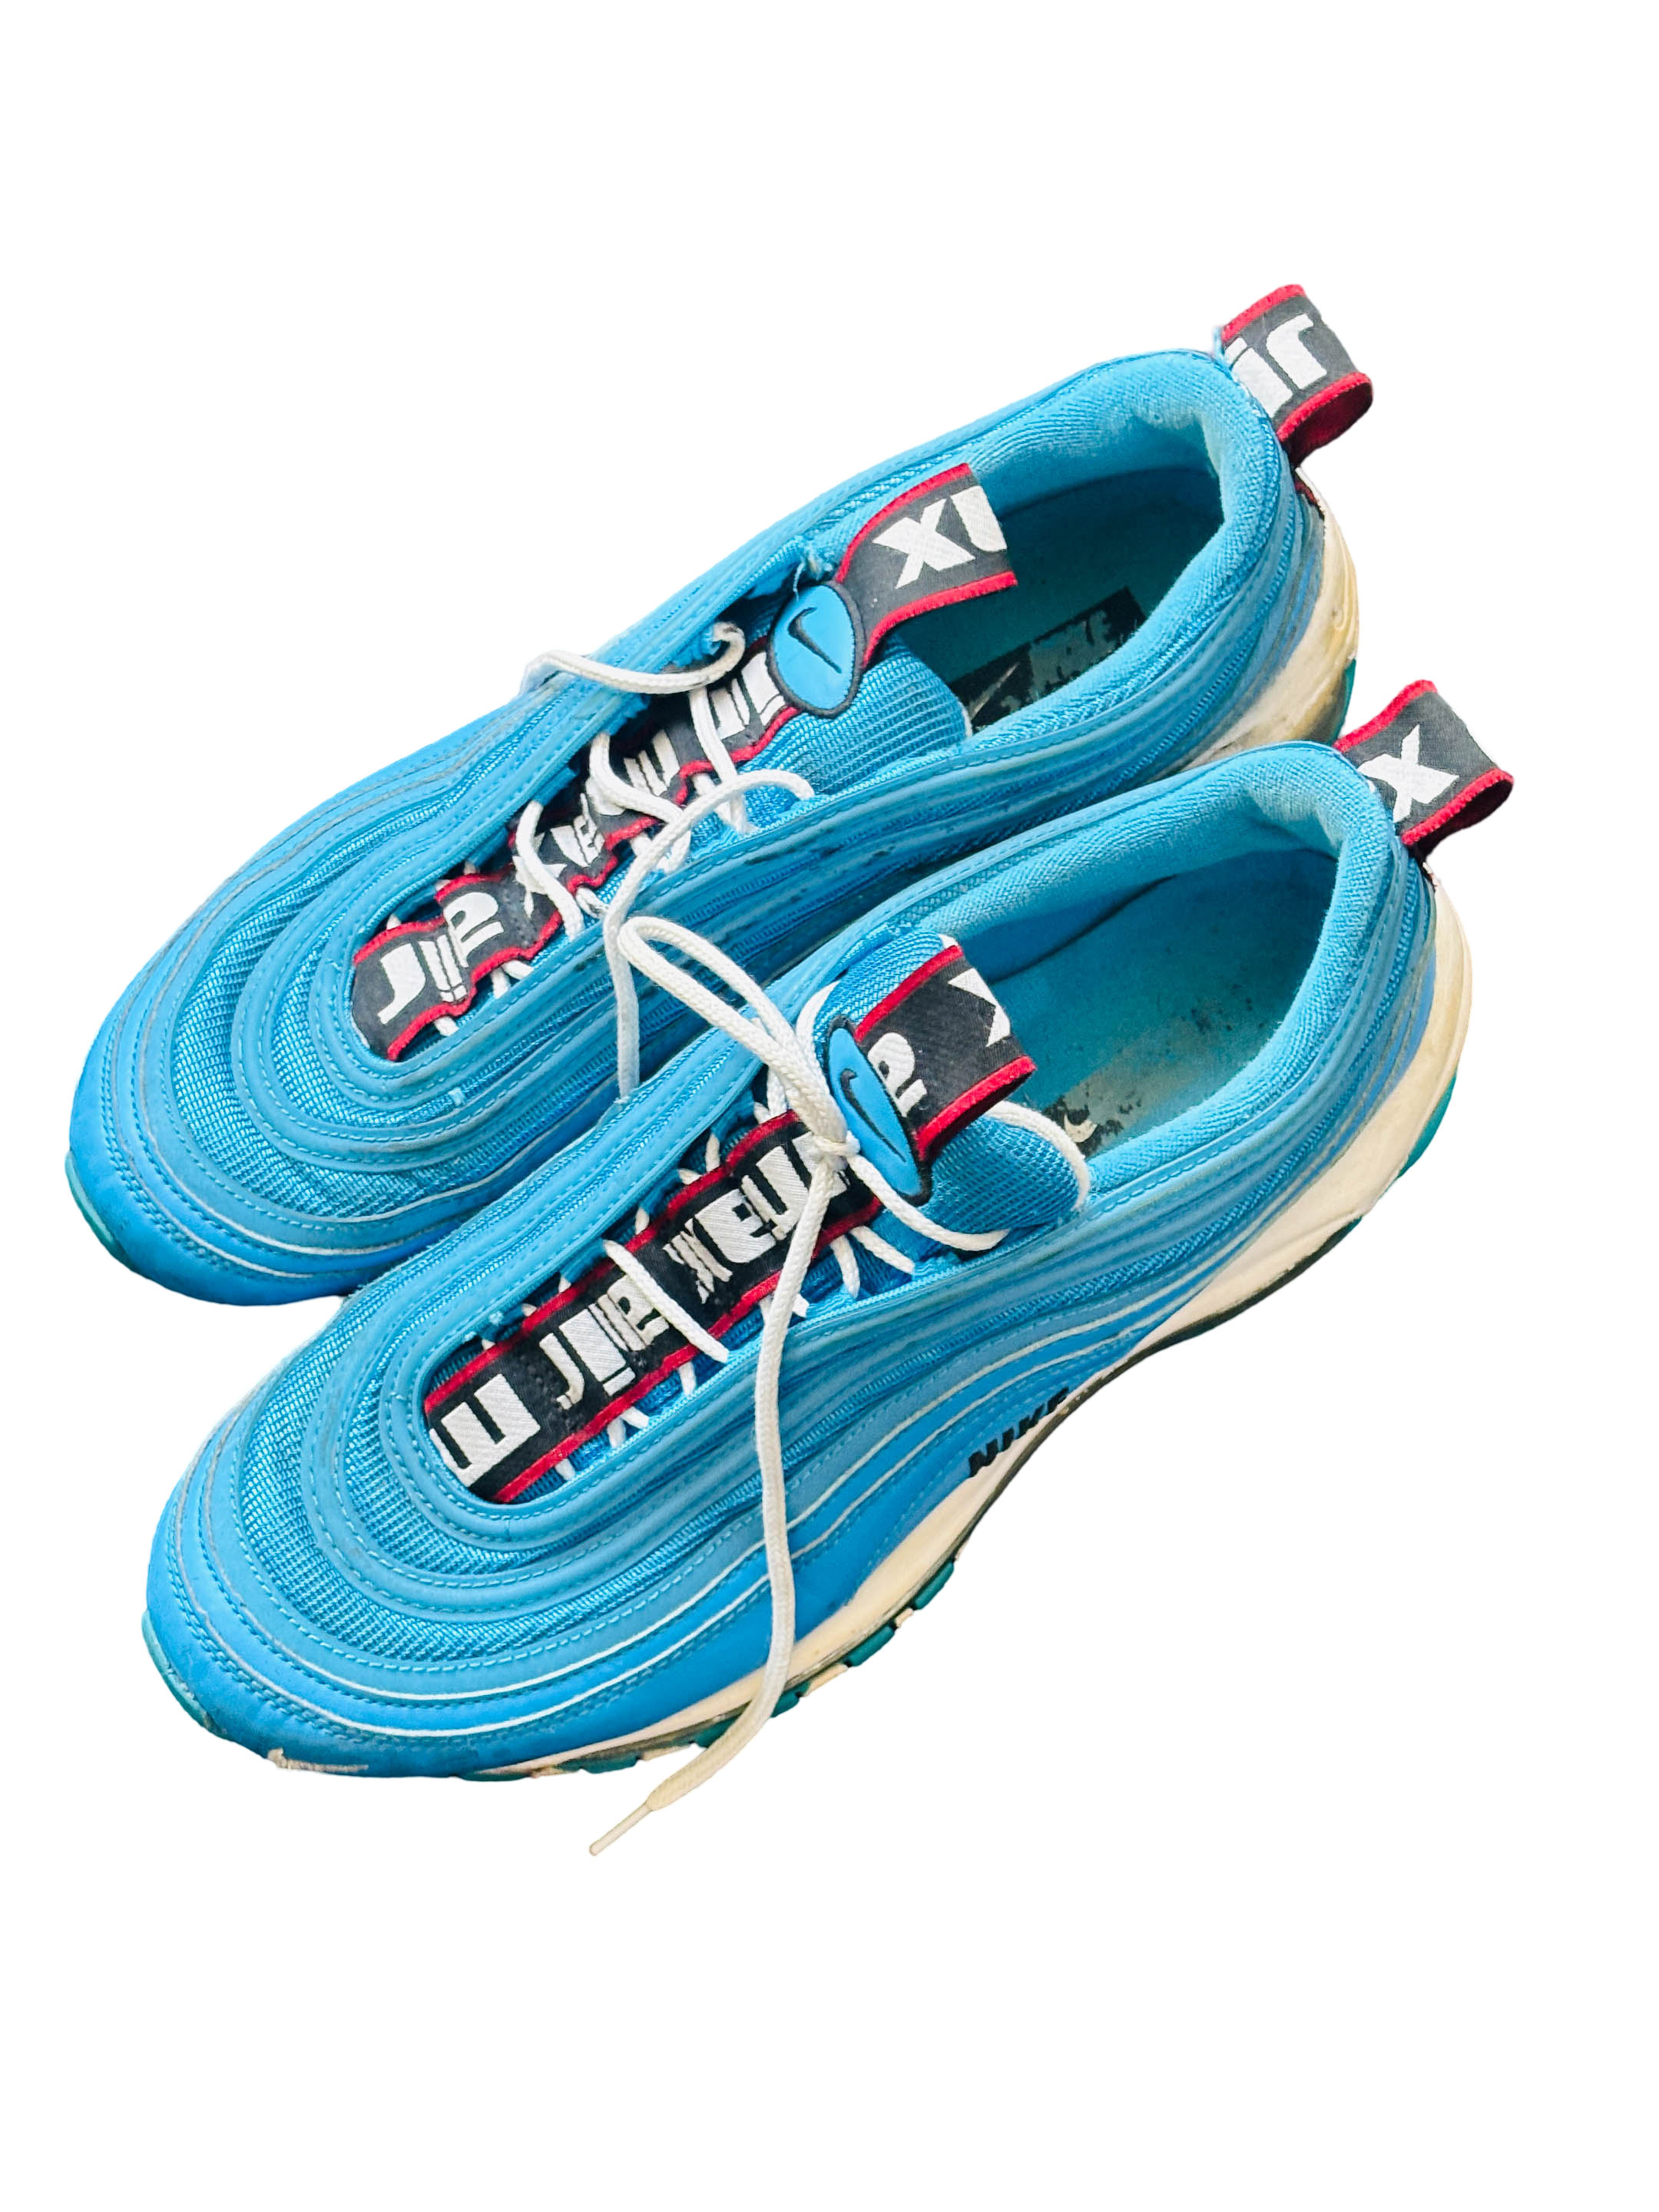  Cliche Vintage| Size 8 - Nike Air Max 97 Royal Blue Neon